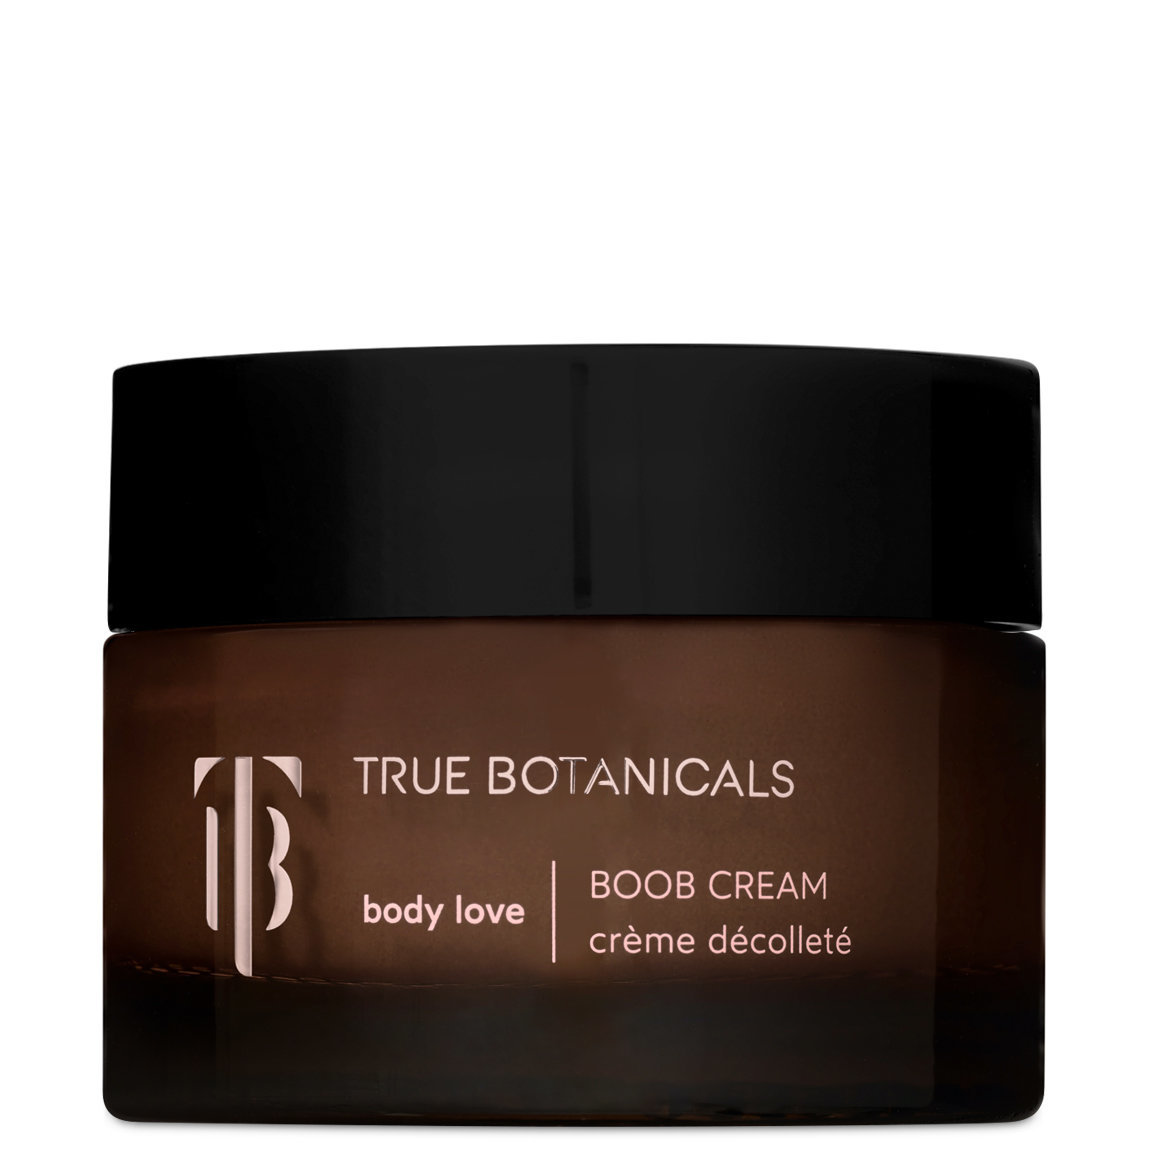 True Botanicals Body Love Boob Cream alternative view 1 - product swatch.